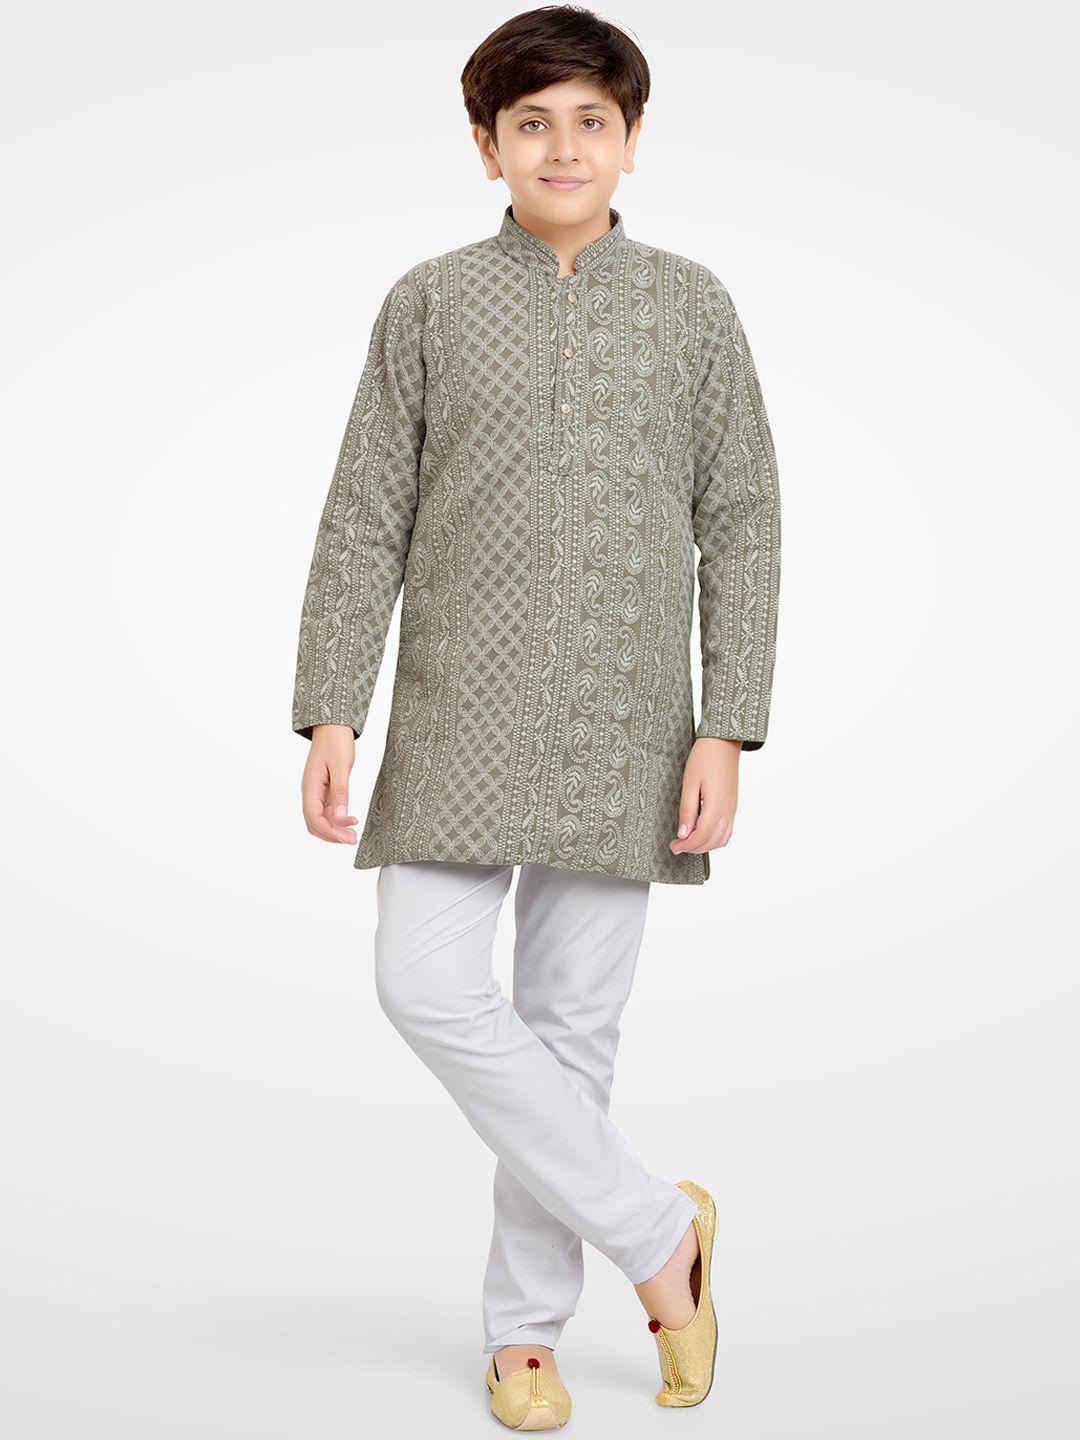 jeetethnics boys grey ethnic motifs embroidered kurti with pyjamas